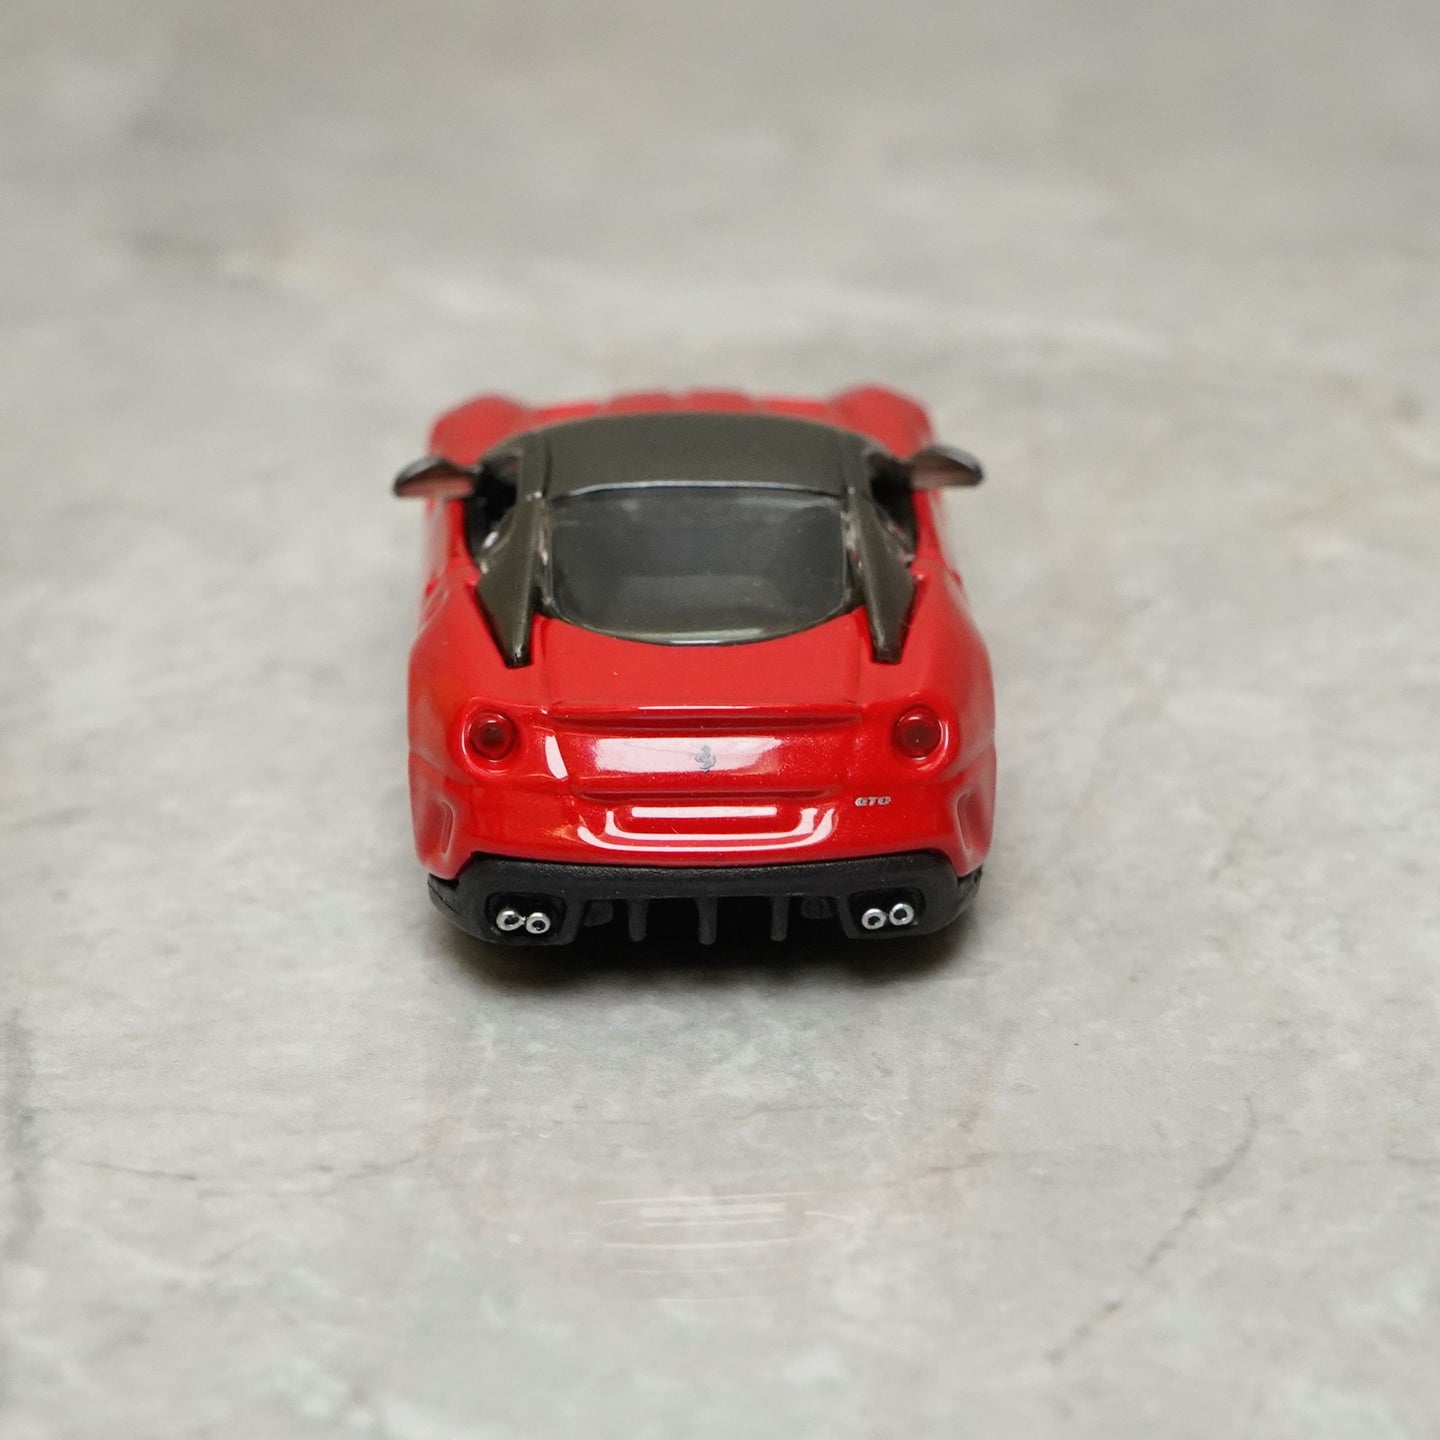 2010 Ferrari 599 GTO 1:64 Diecast Car Model by Bburago